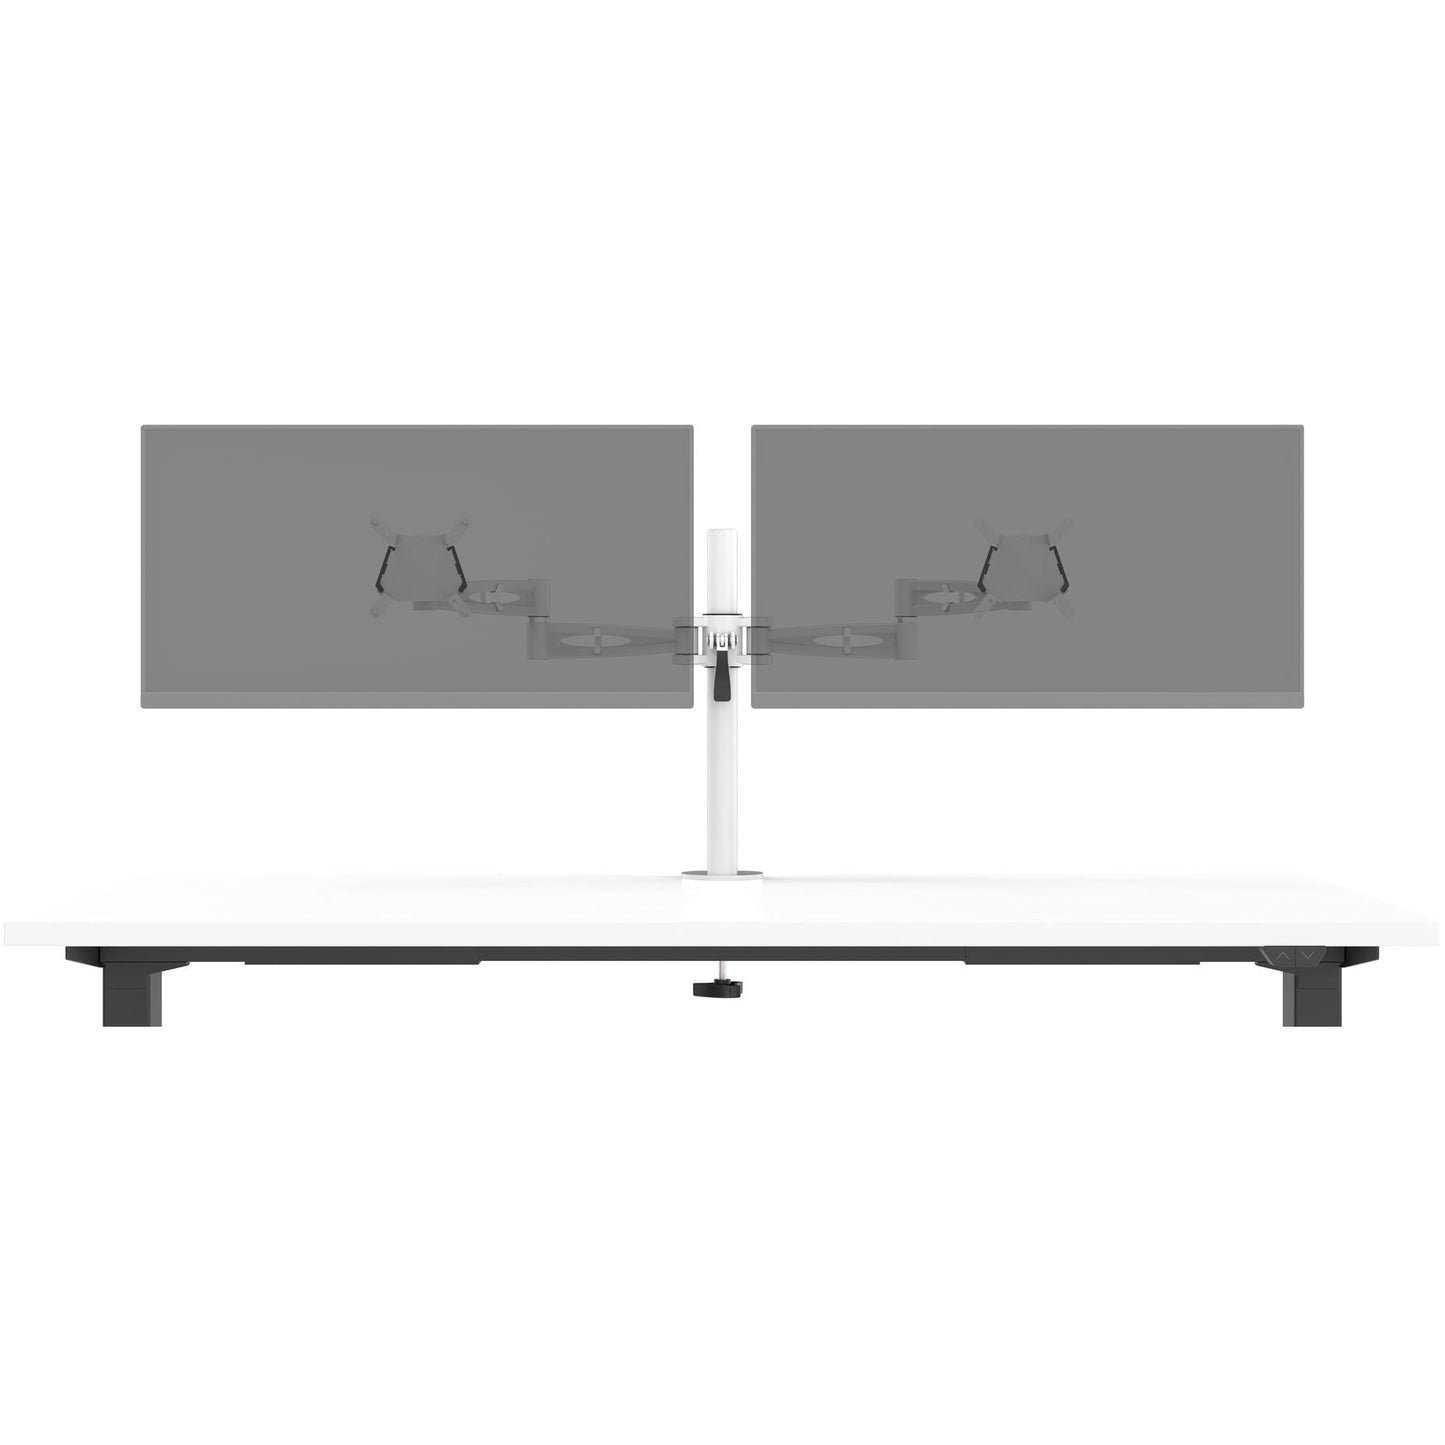 Slate Gray Metalicon Kardo Pole Mounted Monitor Arm For Twin/dual (2) Screens